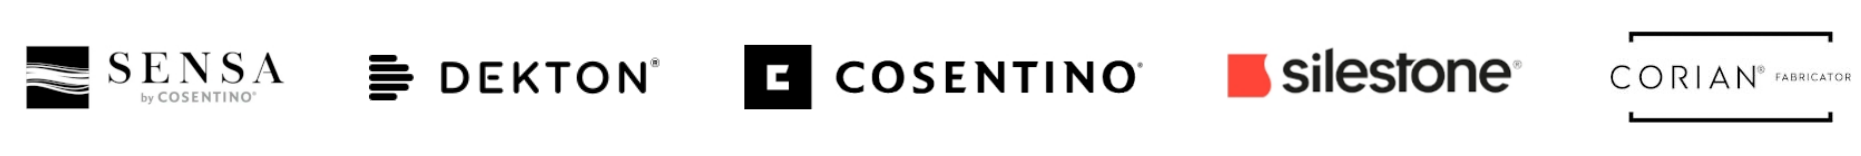 Worktop Brands Sense, Dekton, Cosentino, milestone and Corian